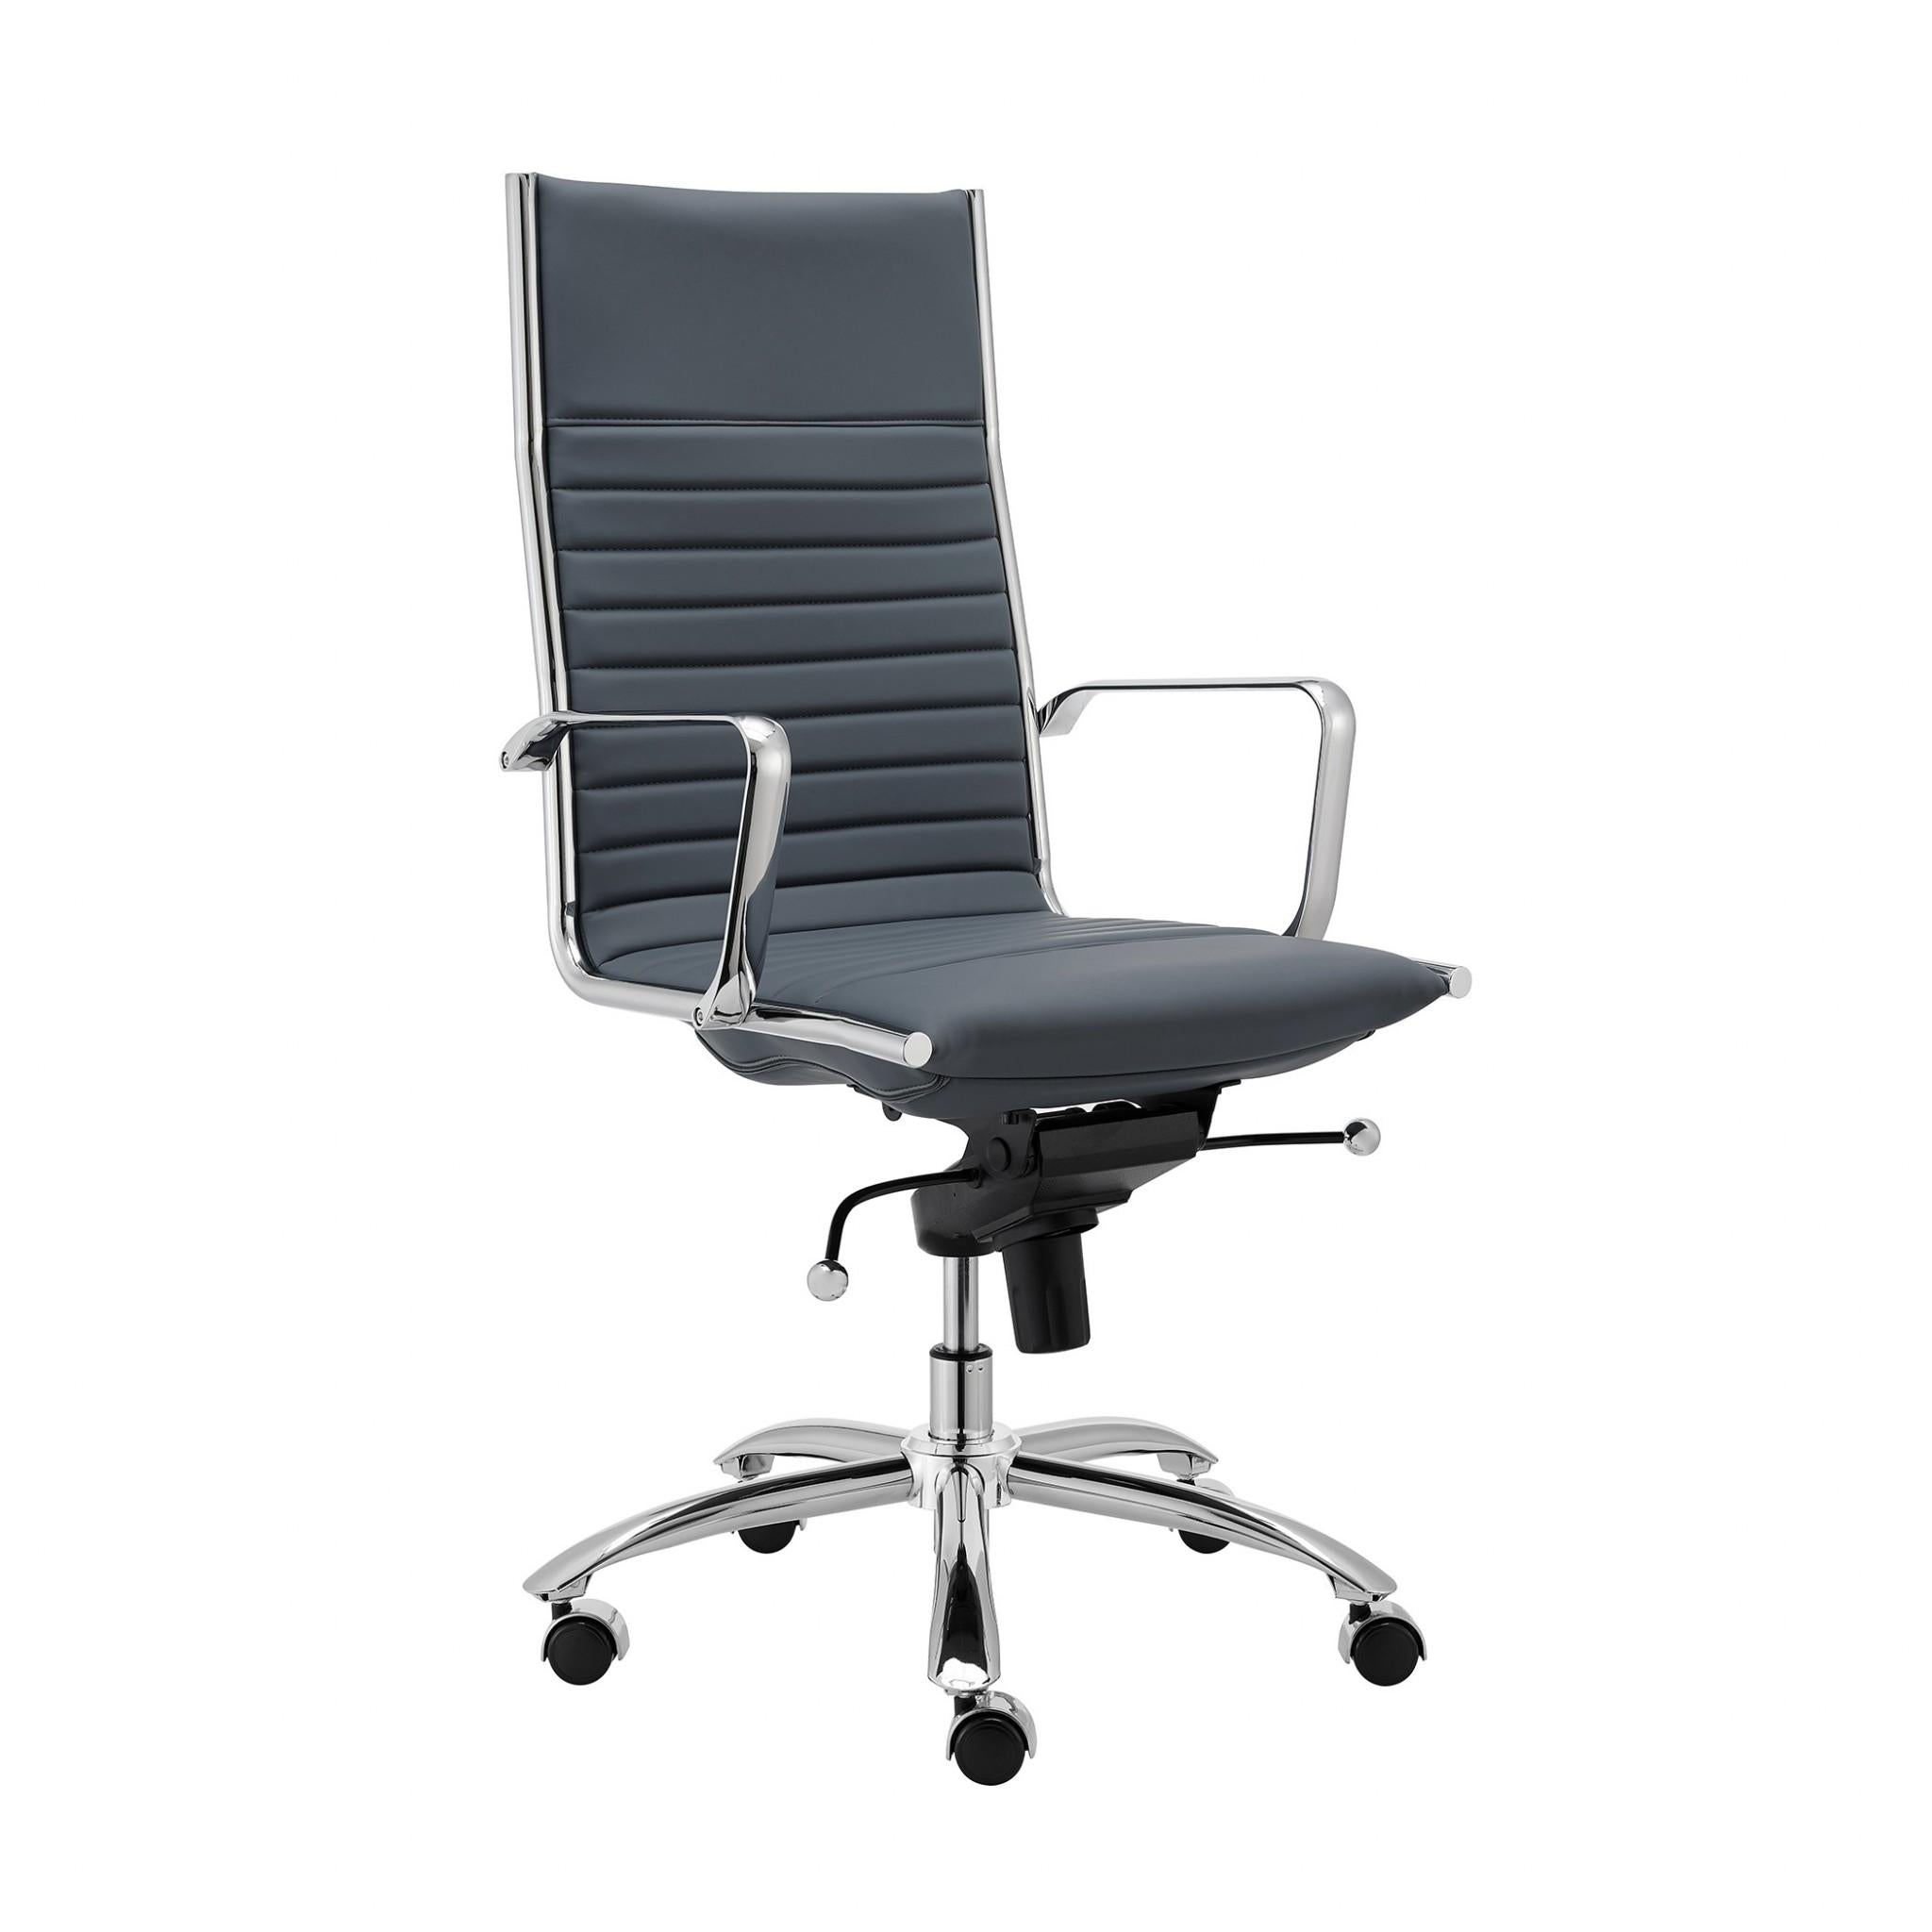 Executive Blue and Chrome High Back Office Chair